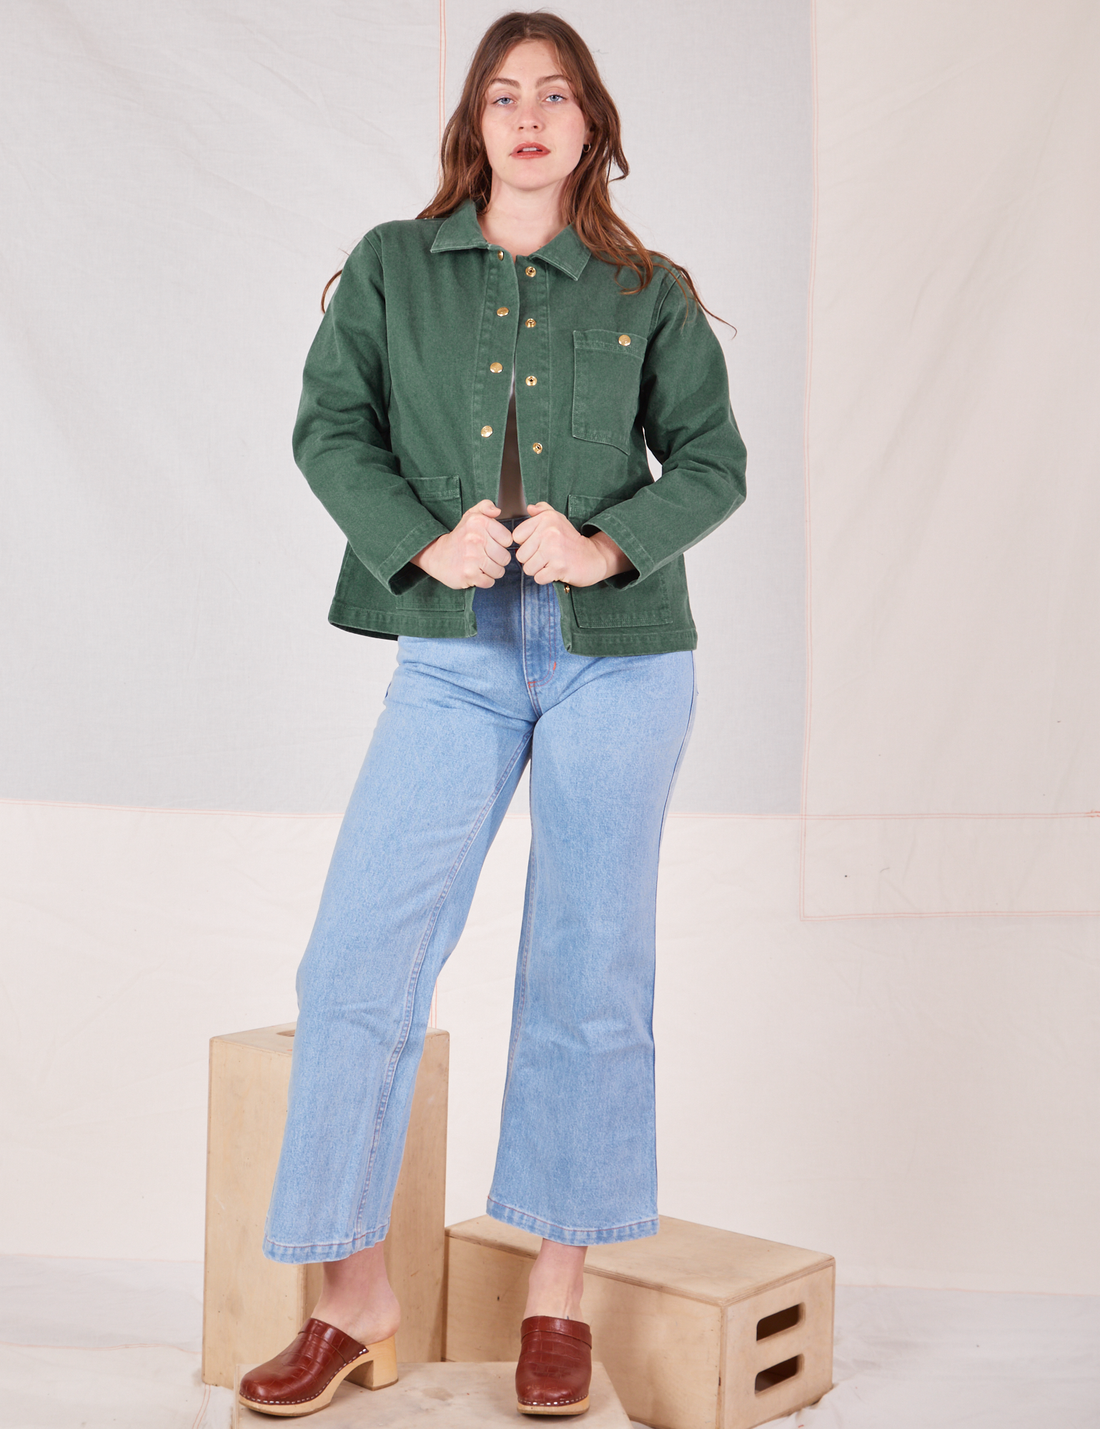 Allison is wearing Denim Work Jacket in Dark Green Emerald and light wash Sailor Jeans